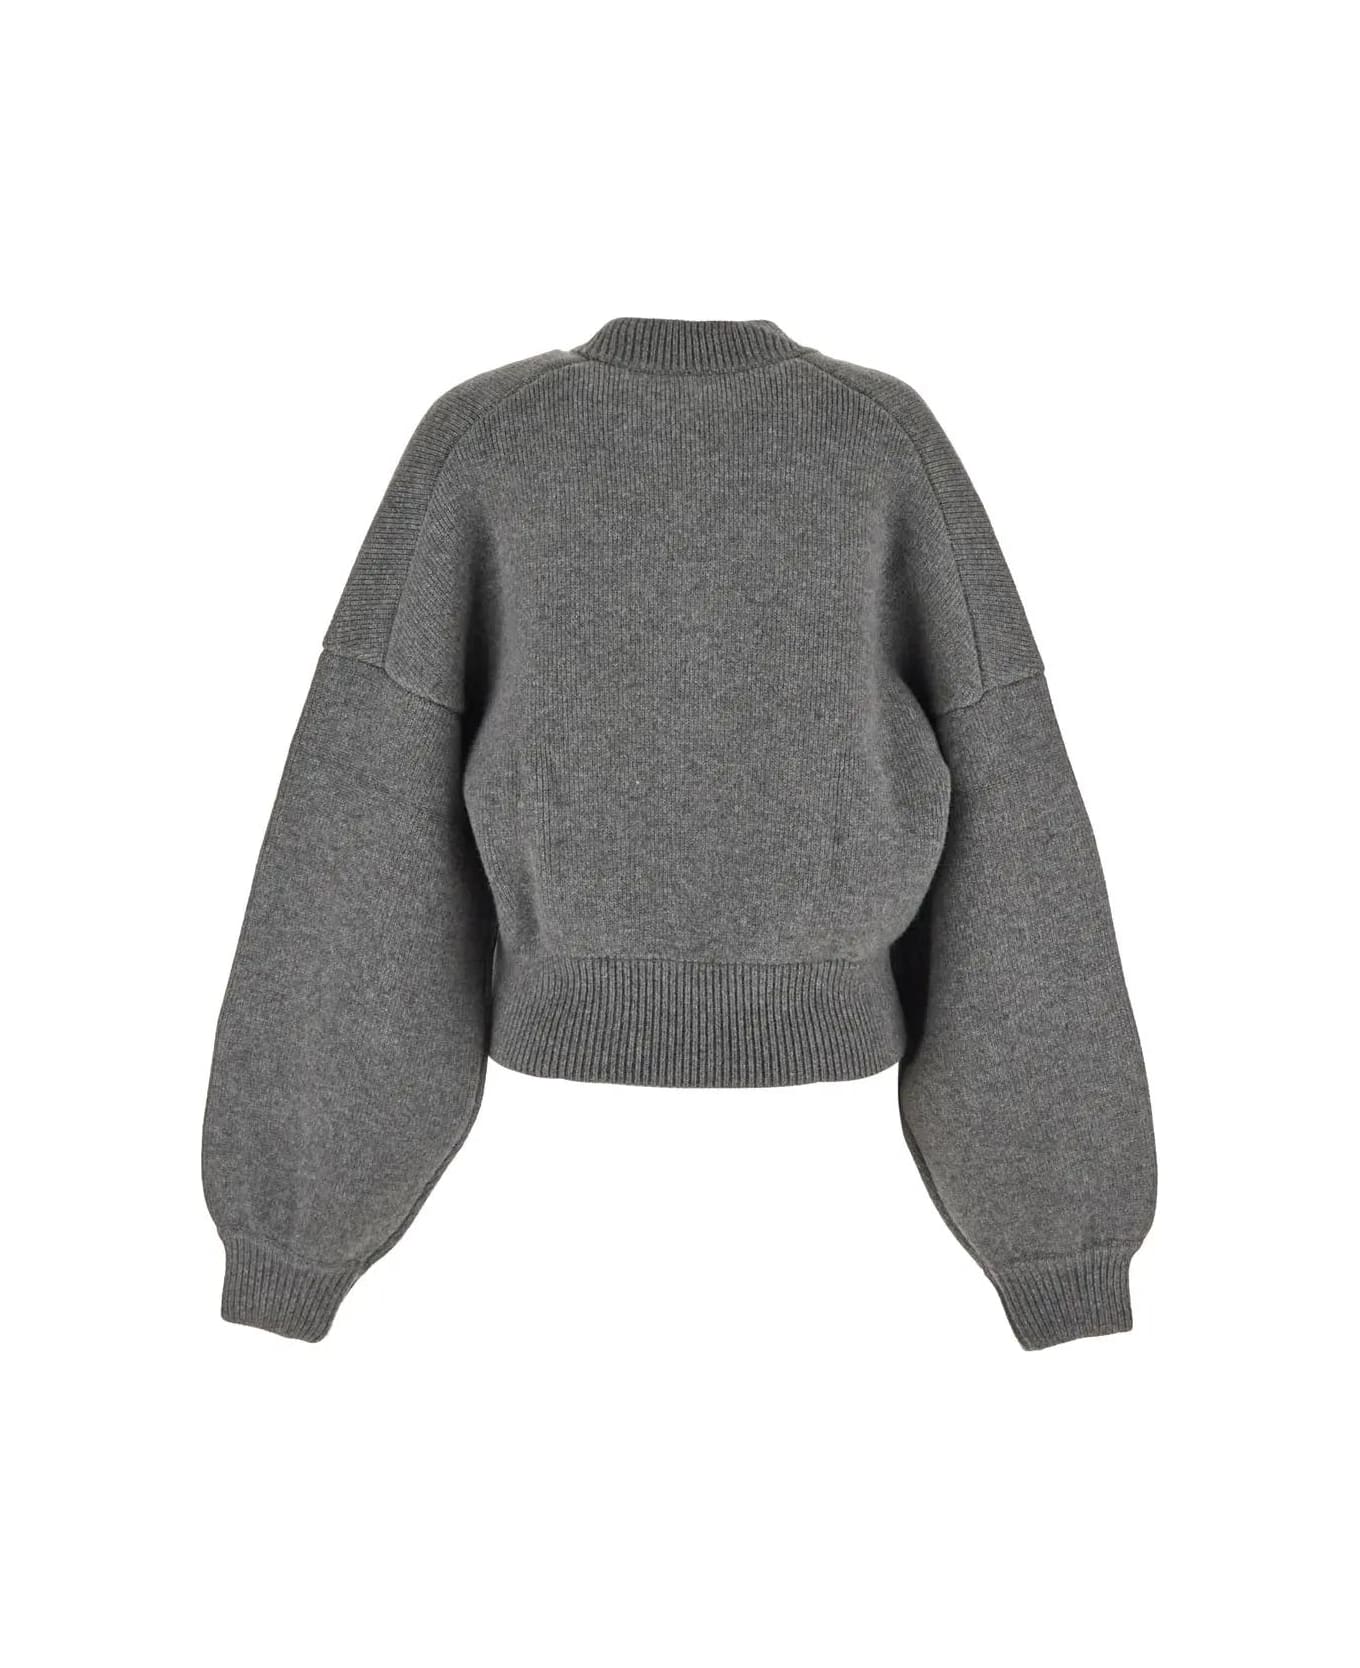 Khaite Cashmere Sweater - Smoke